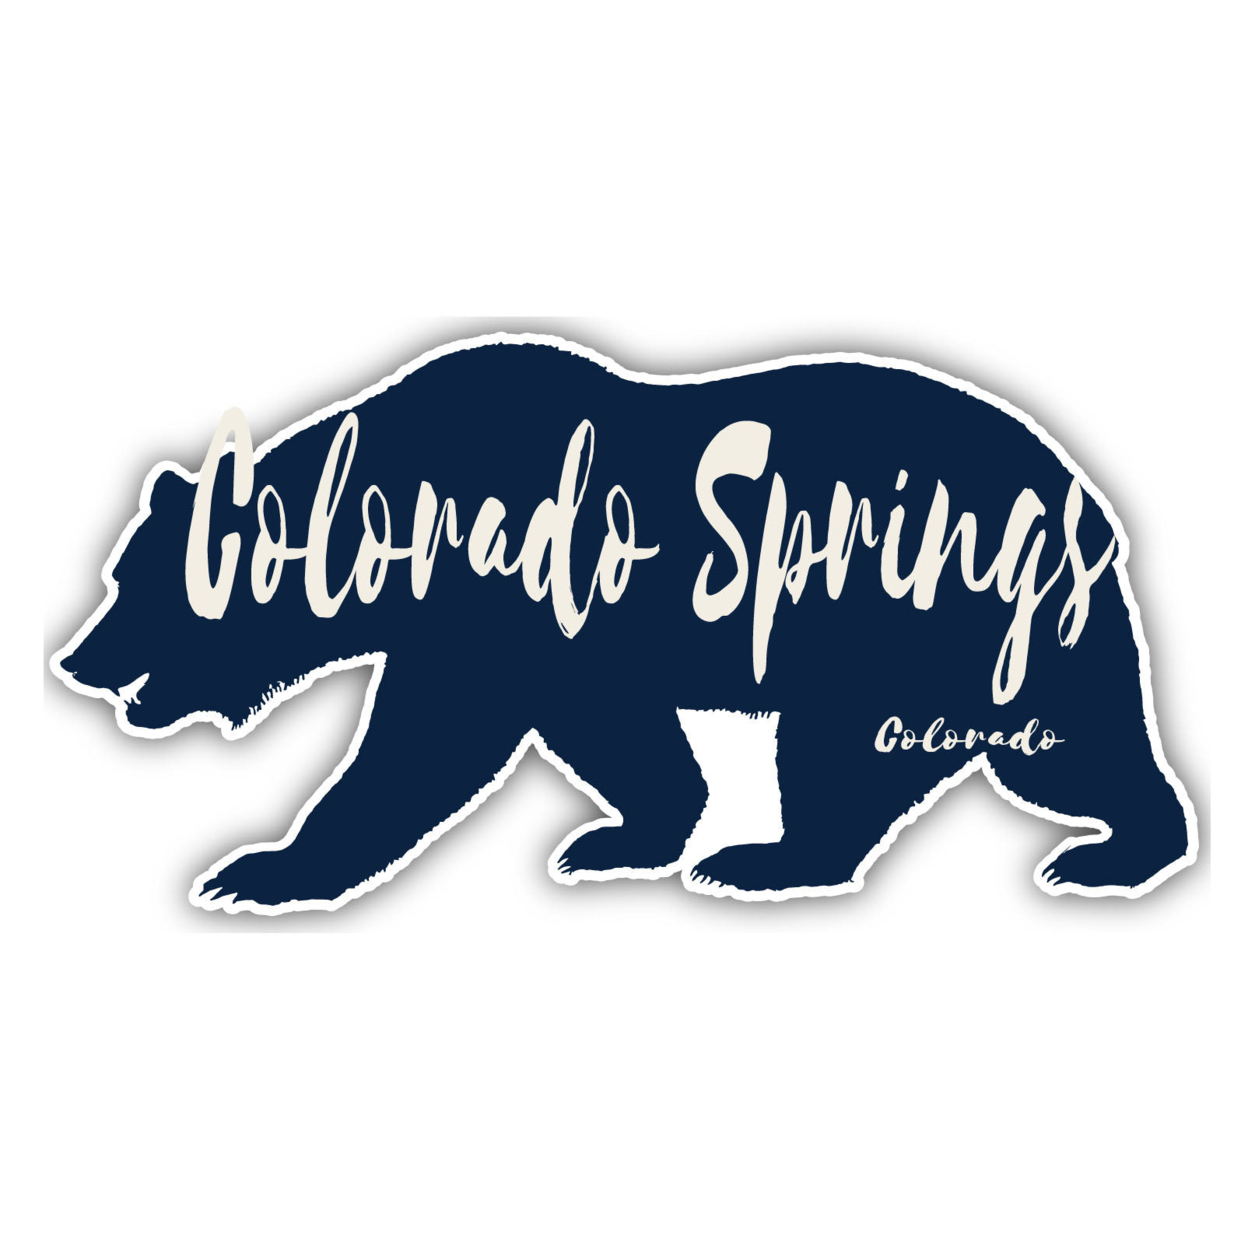 Colorado Springs Colorado Souvenir Decorative Stickers (Choose Theme And Size) - Single Unit, 8-Inch, Bear